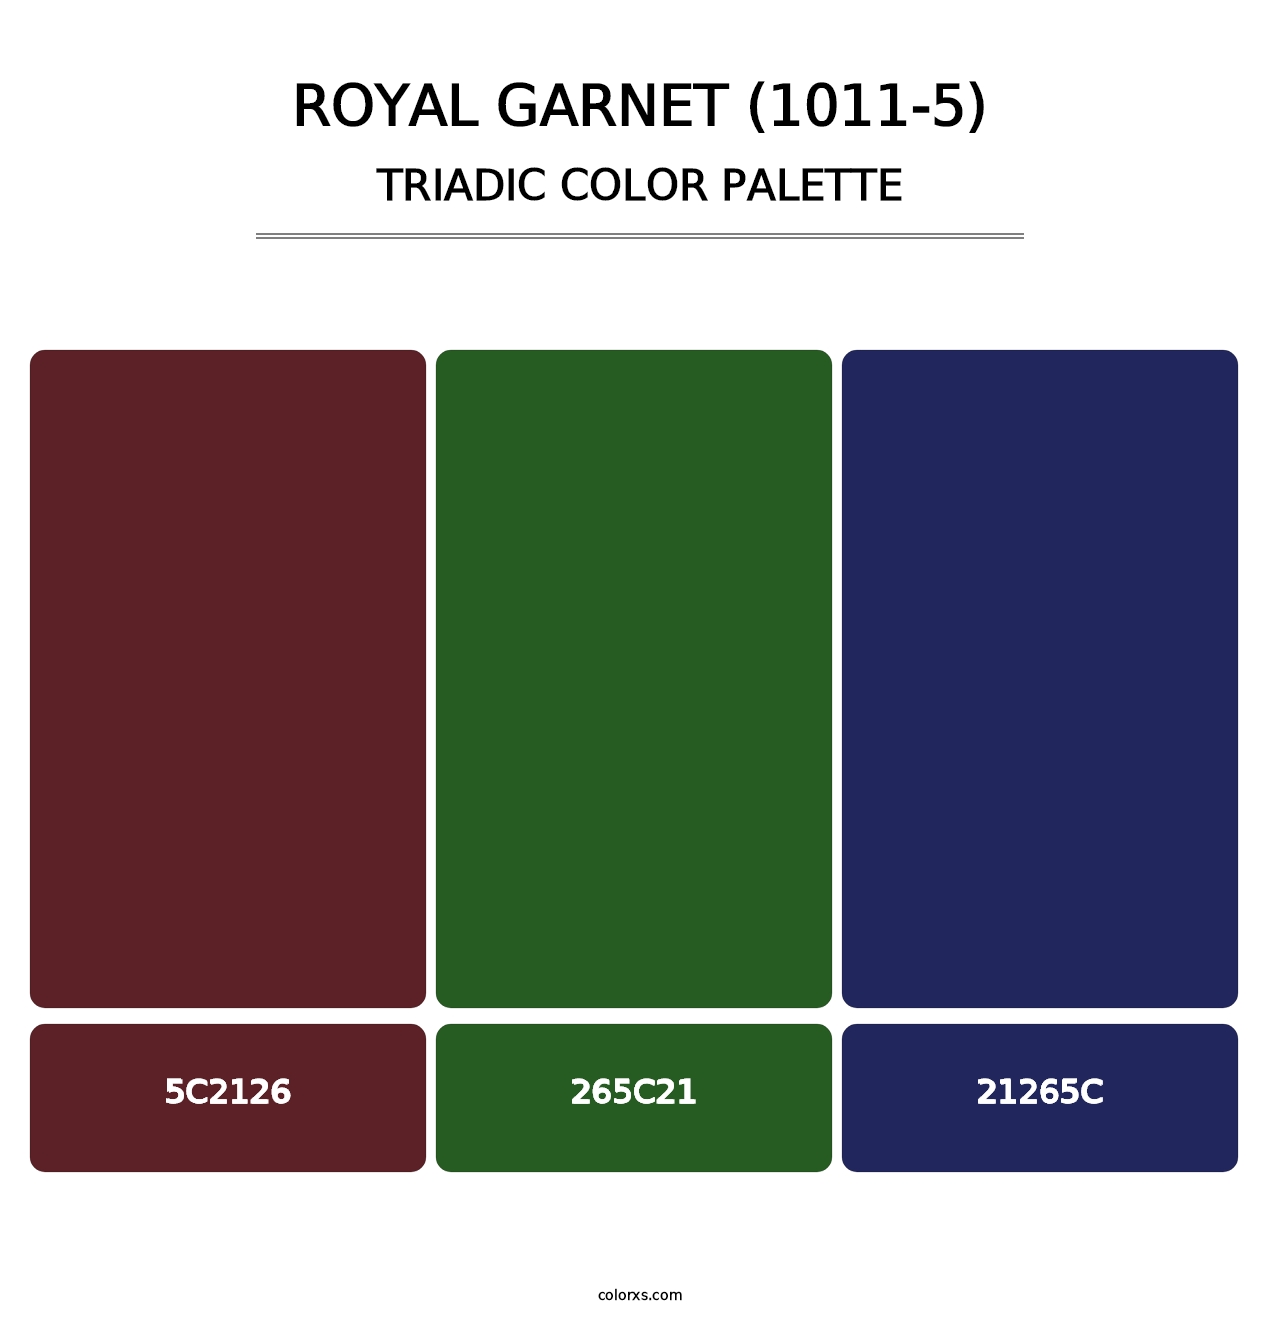 Royal Garnet (1011-5) - Triadic Color Palette